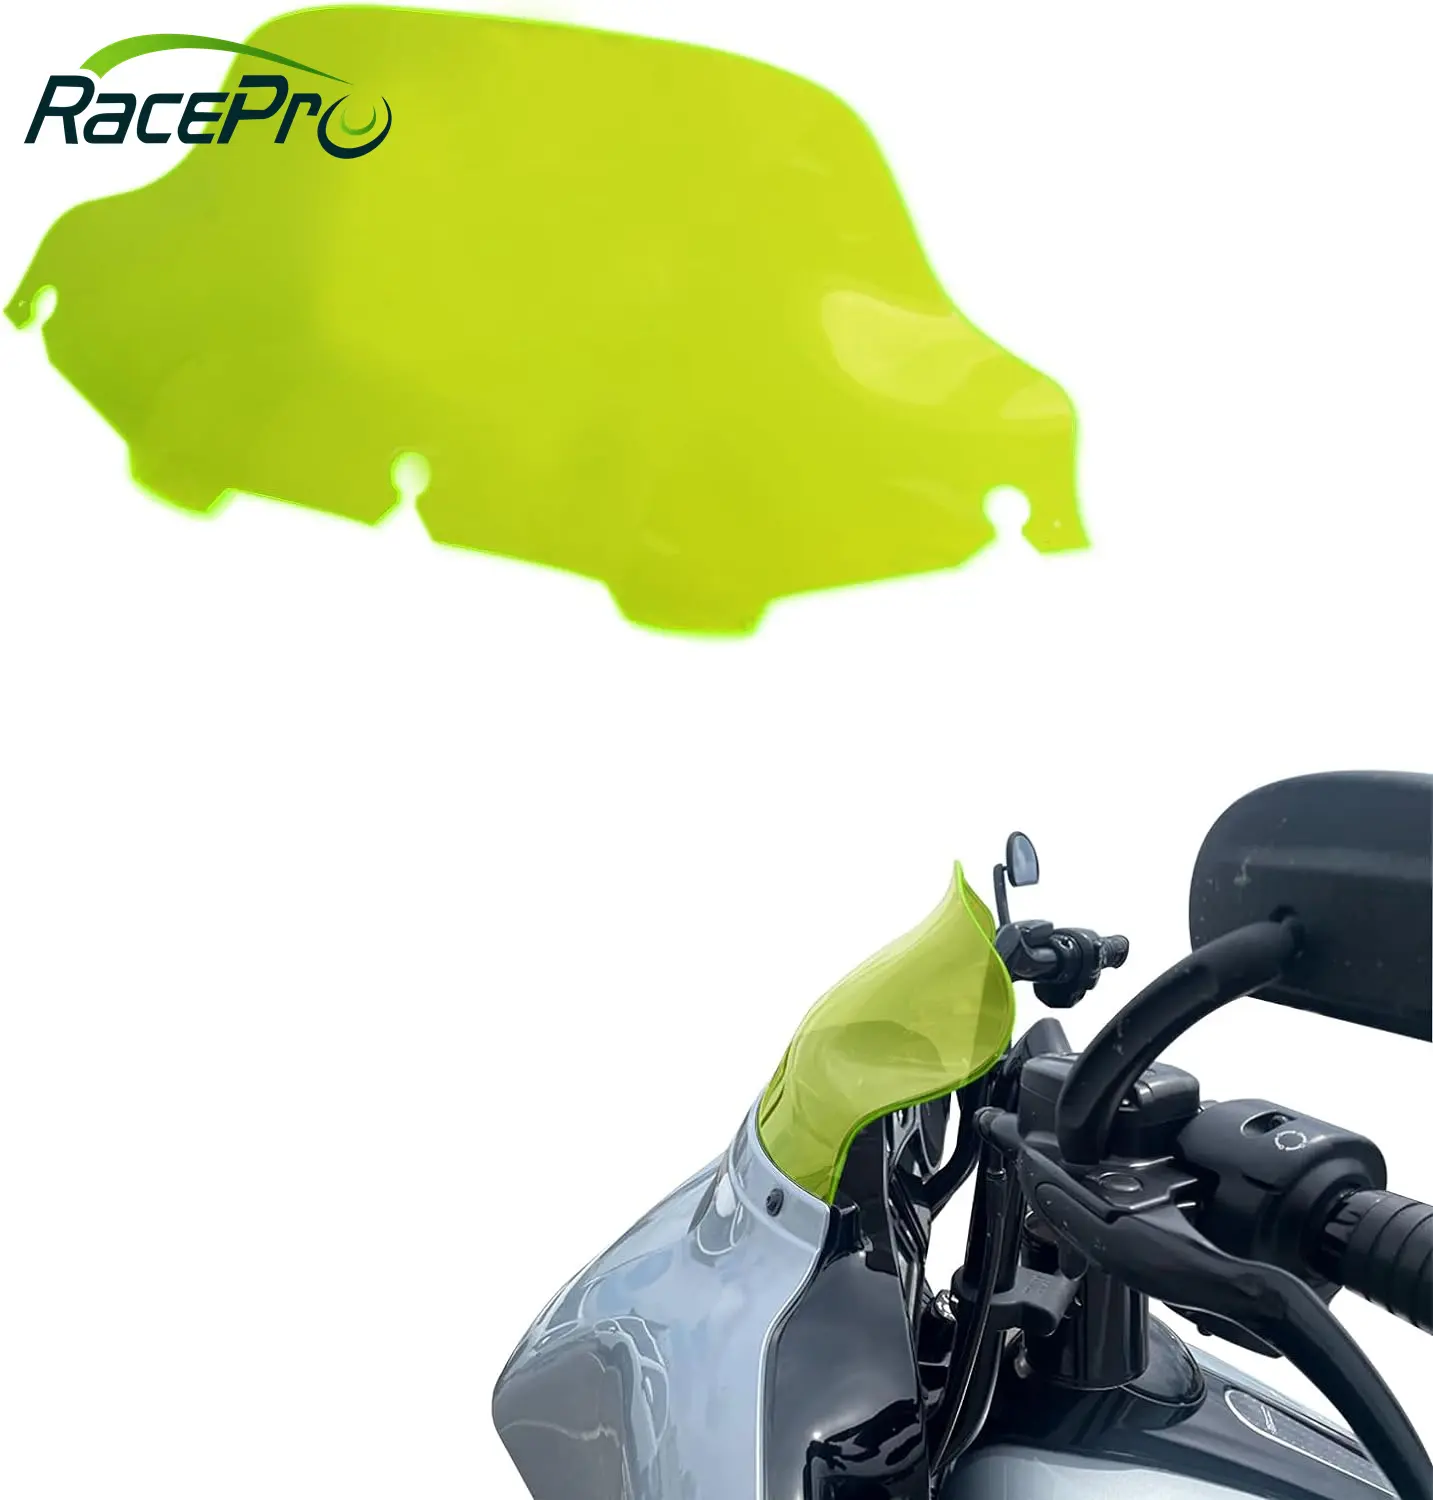 हार्ले टूरिंग इलेक्ट्रा स्ट्रीट ग्लाइड FLHT FLHTC FLHX 1996 - 2013 के लिए RACEPRO 8 इंच ग्रीन वेव मोटरसाइकिल विंडशील्ड विंडस्क्रीन